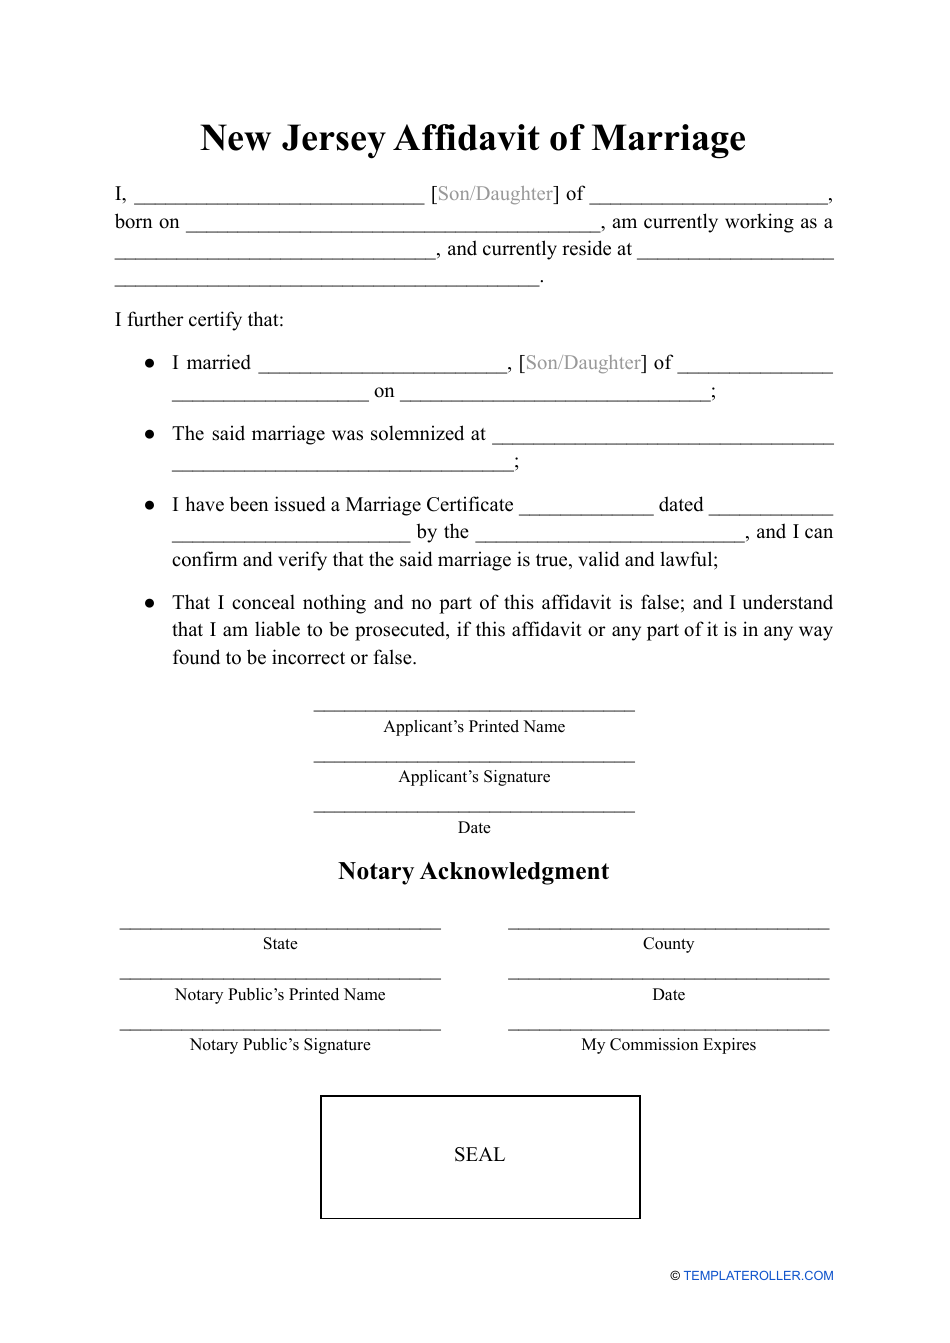 Affidavit of Marriage - New Jersey, Page 1